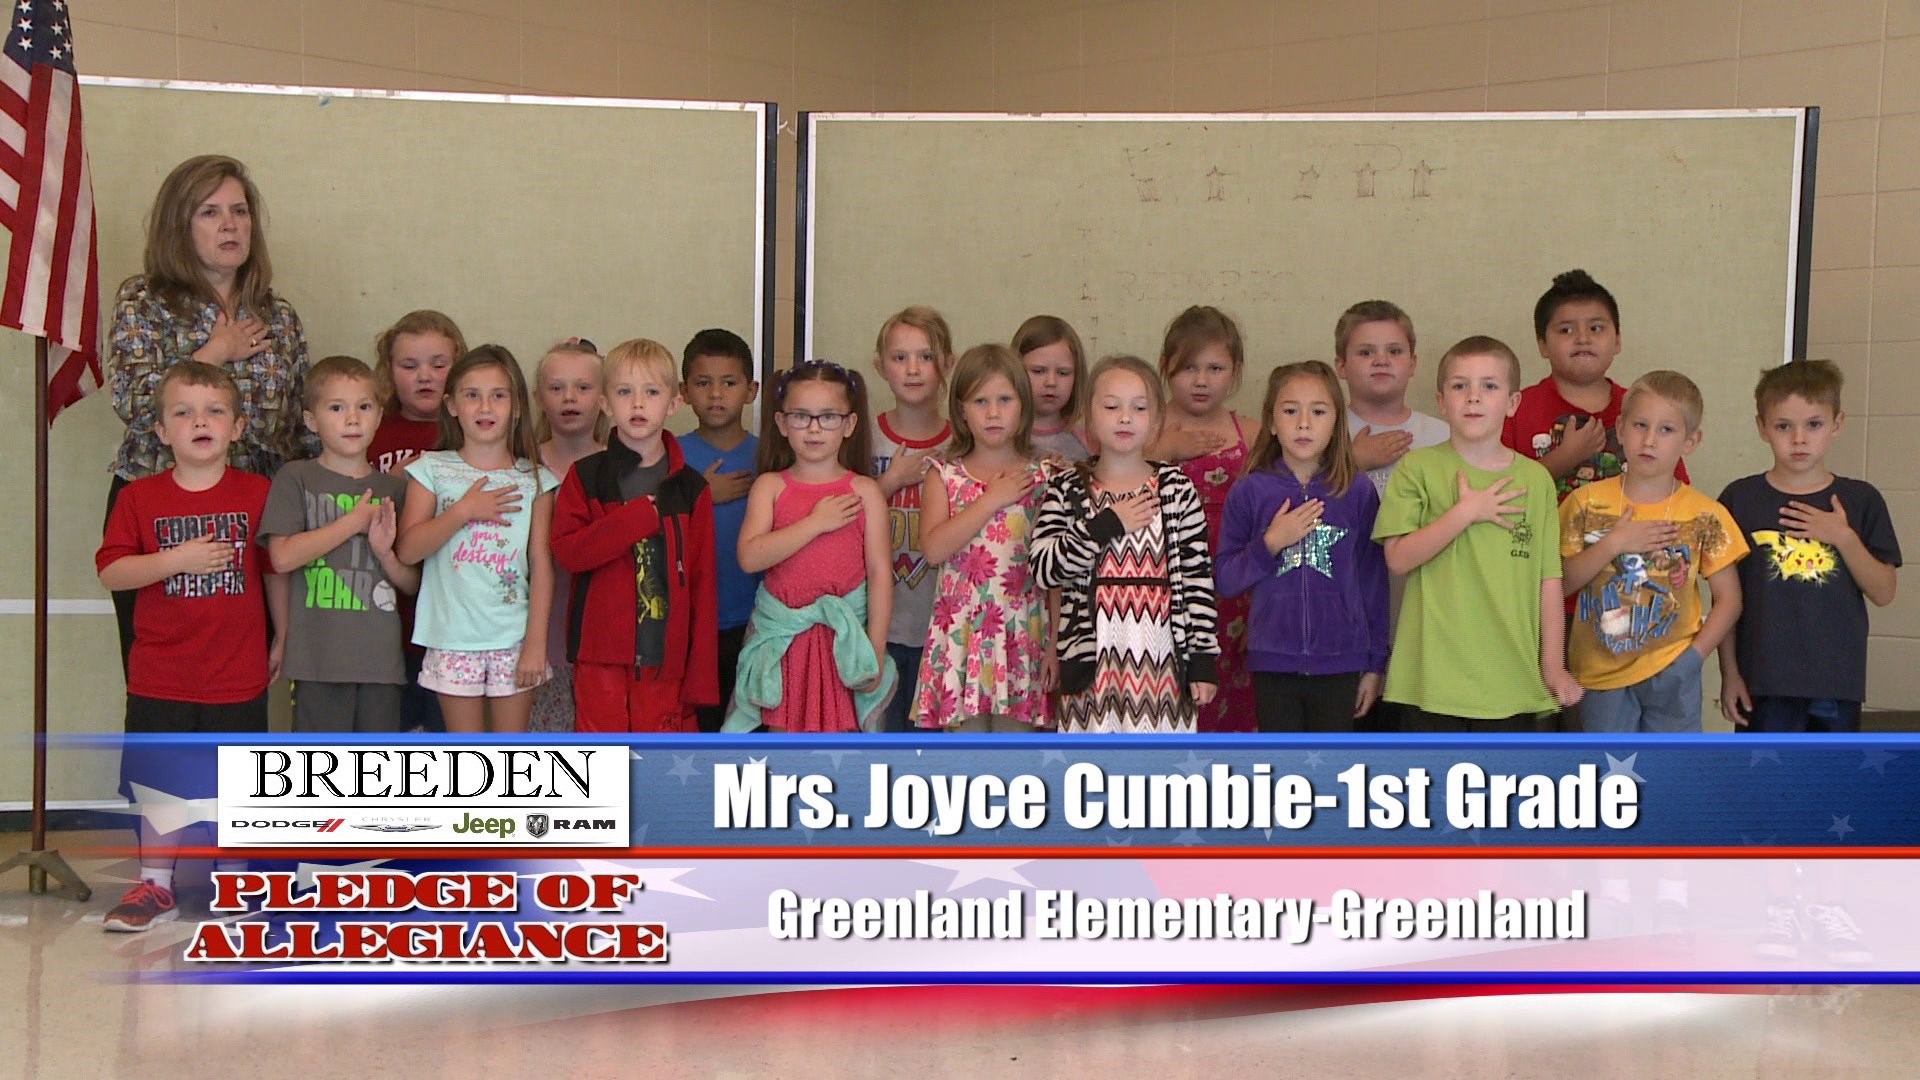 Mrs. Joyce Cumbie -1st Grade  Greenland Elementary - Greenland